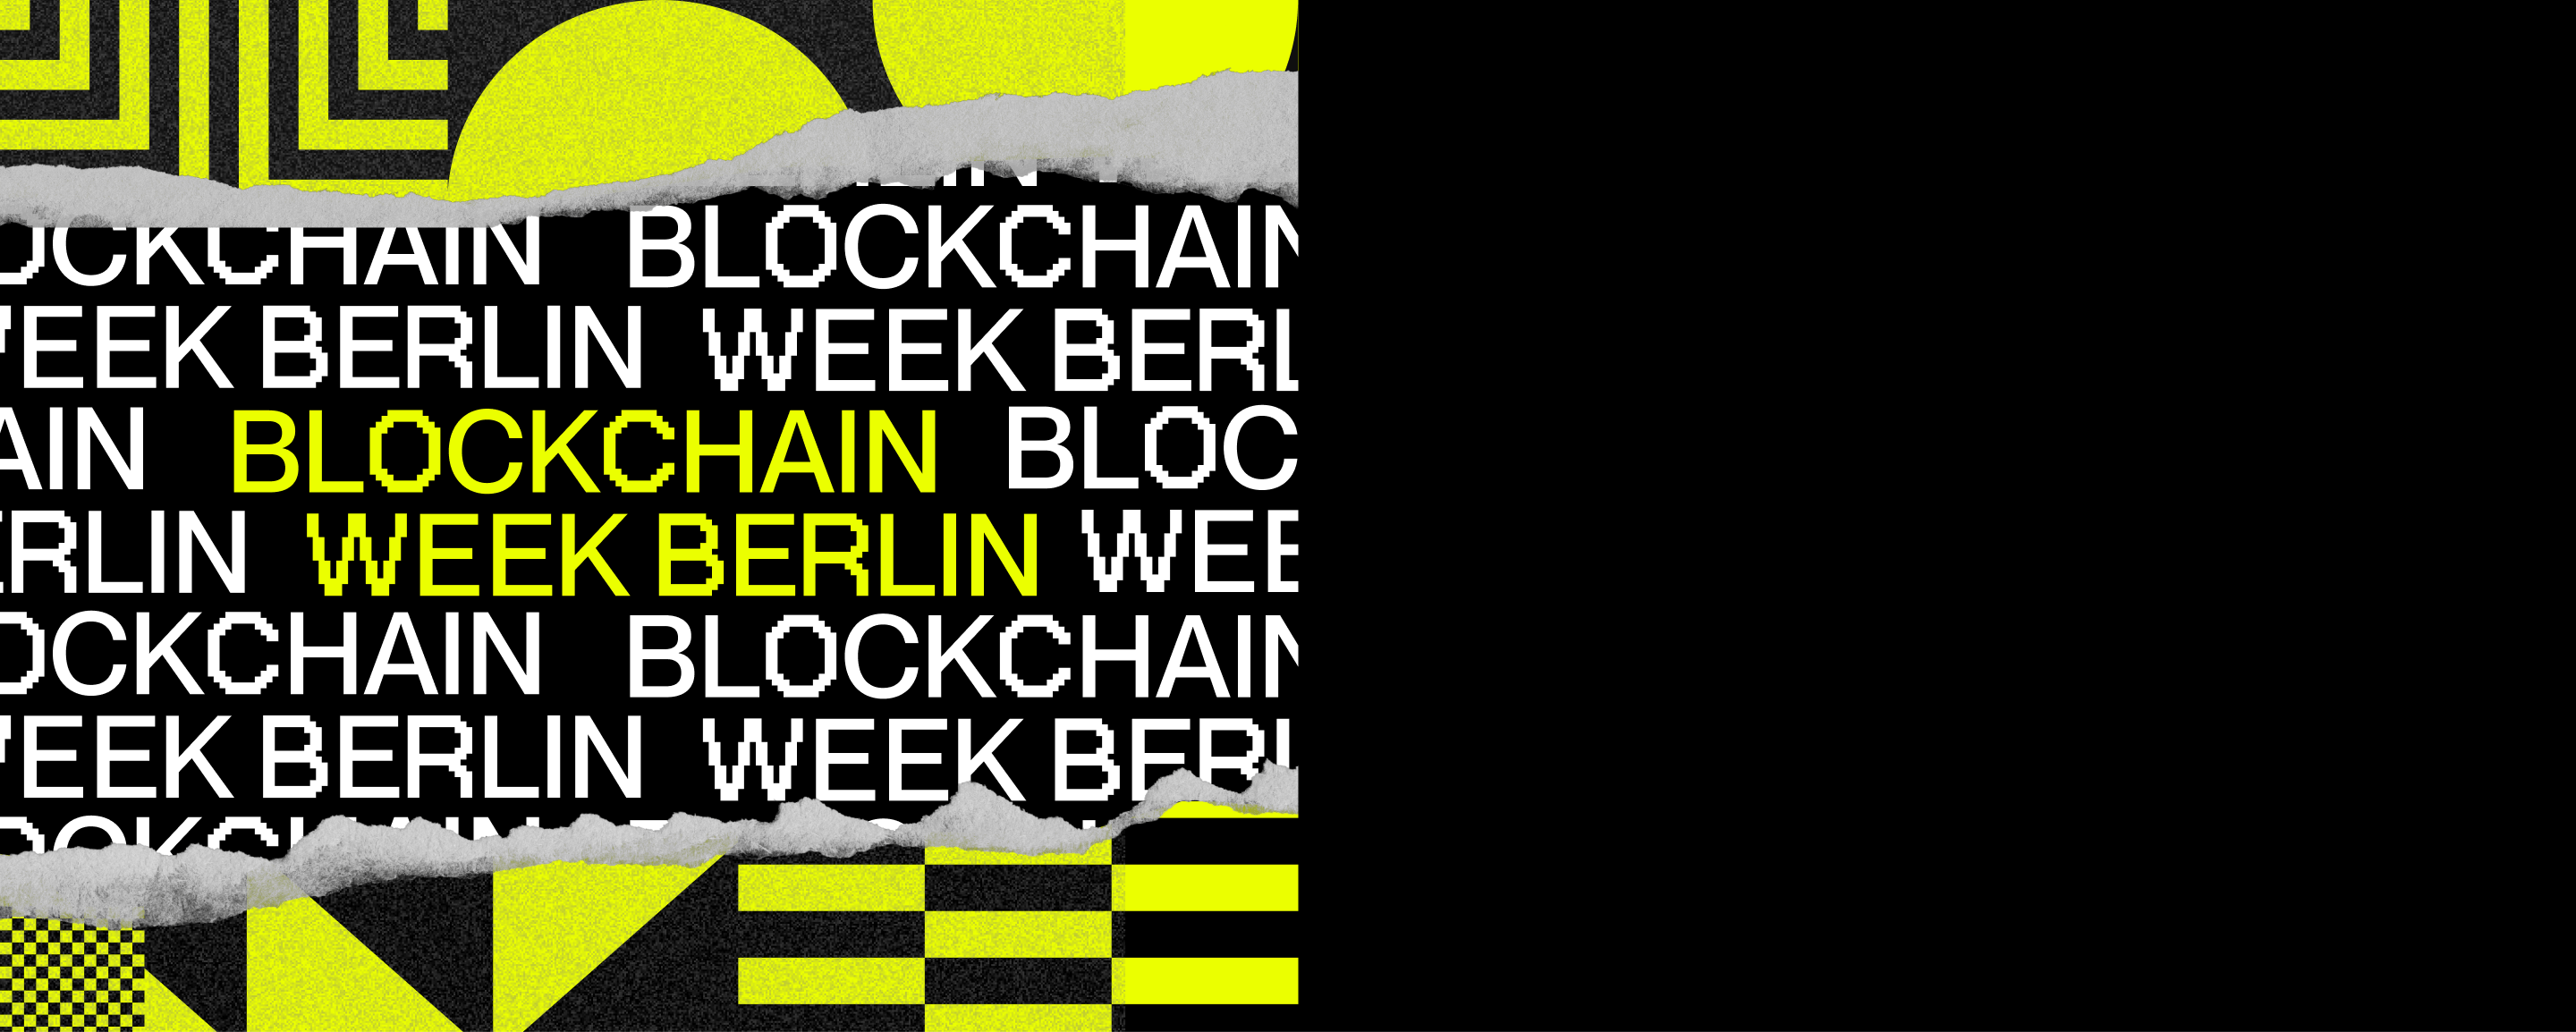 blockchain week berlin